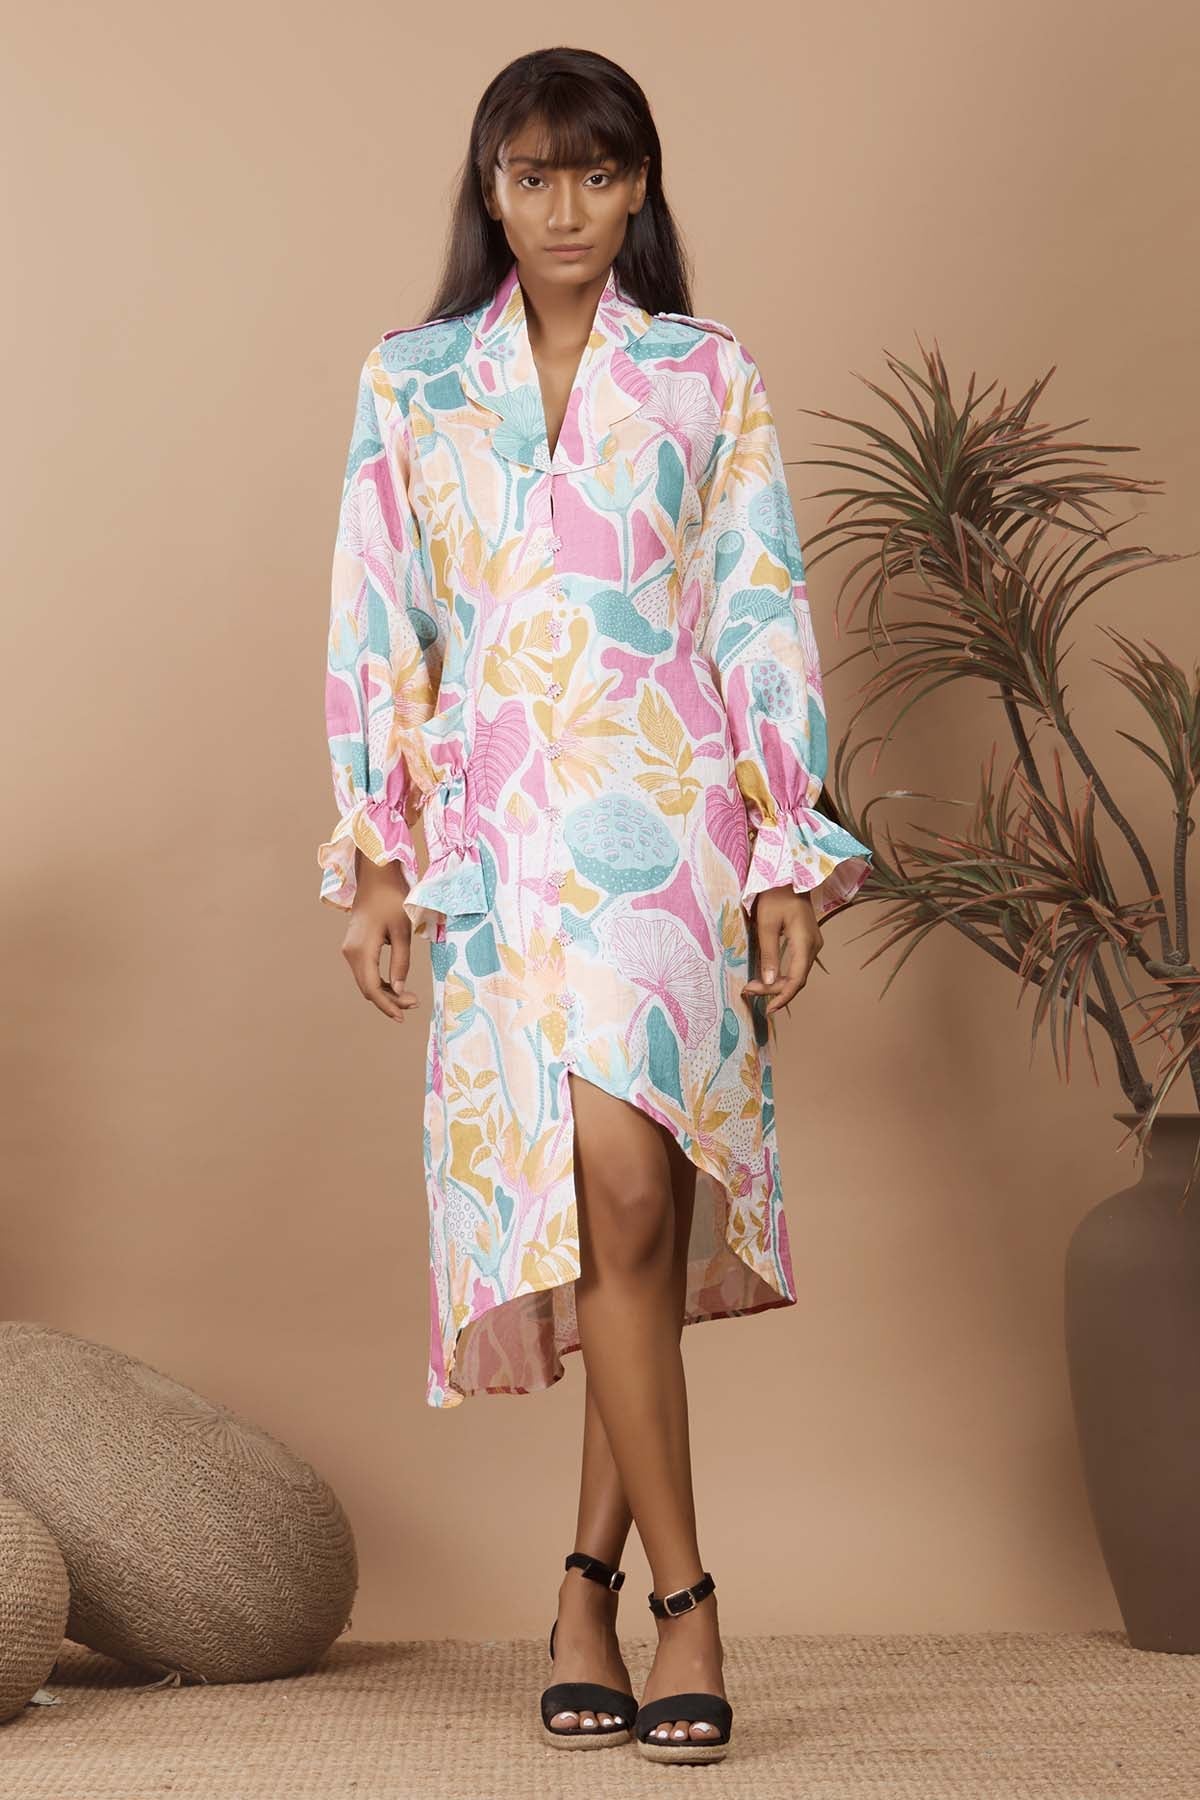 Buy Niyami Romantic Rhapsody: Scallop Lace Linen Dress at scrollnshops